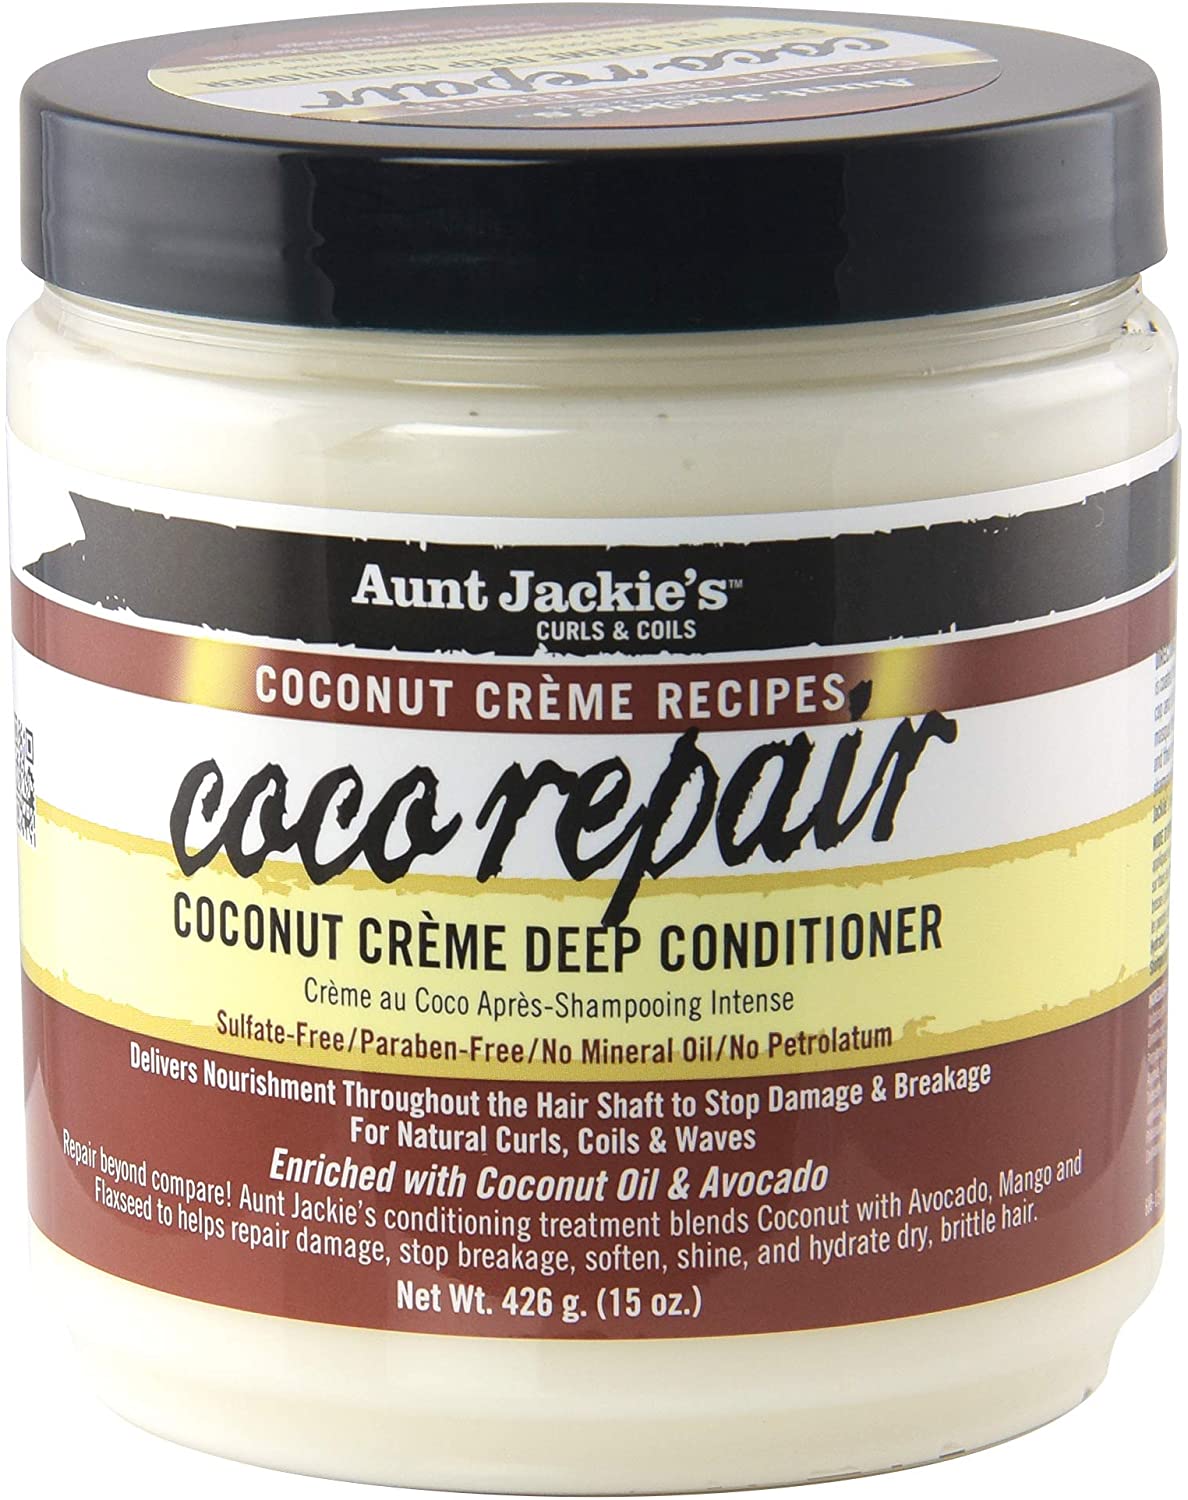 Aunt Jackies Curls & Coils Coconut Creme Recipes Coco Repair Coconut Creme Deep Conditioner - 15 Oz